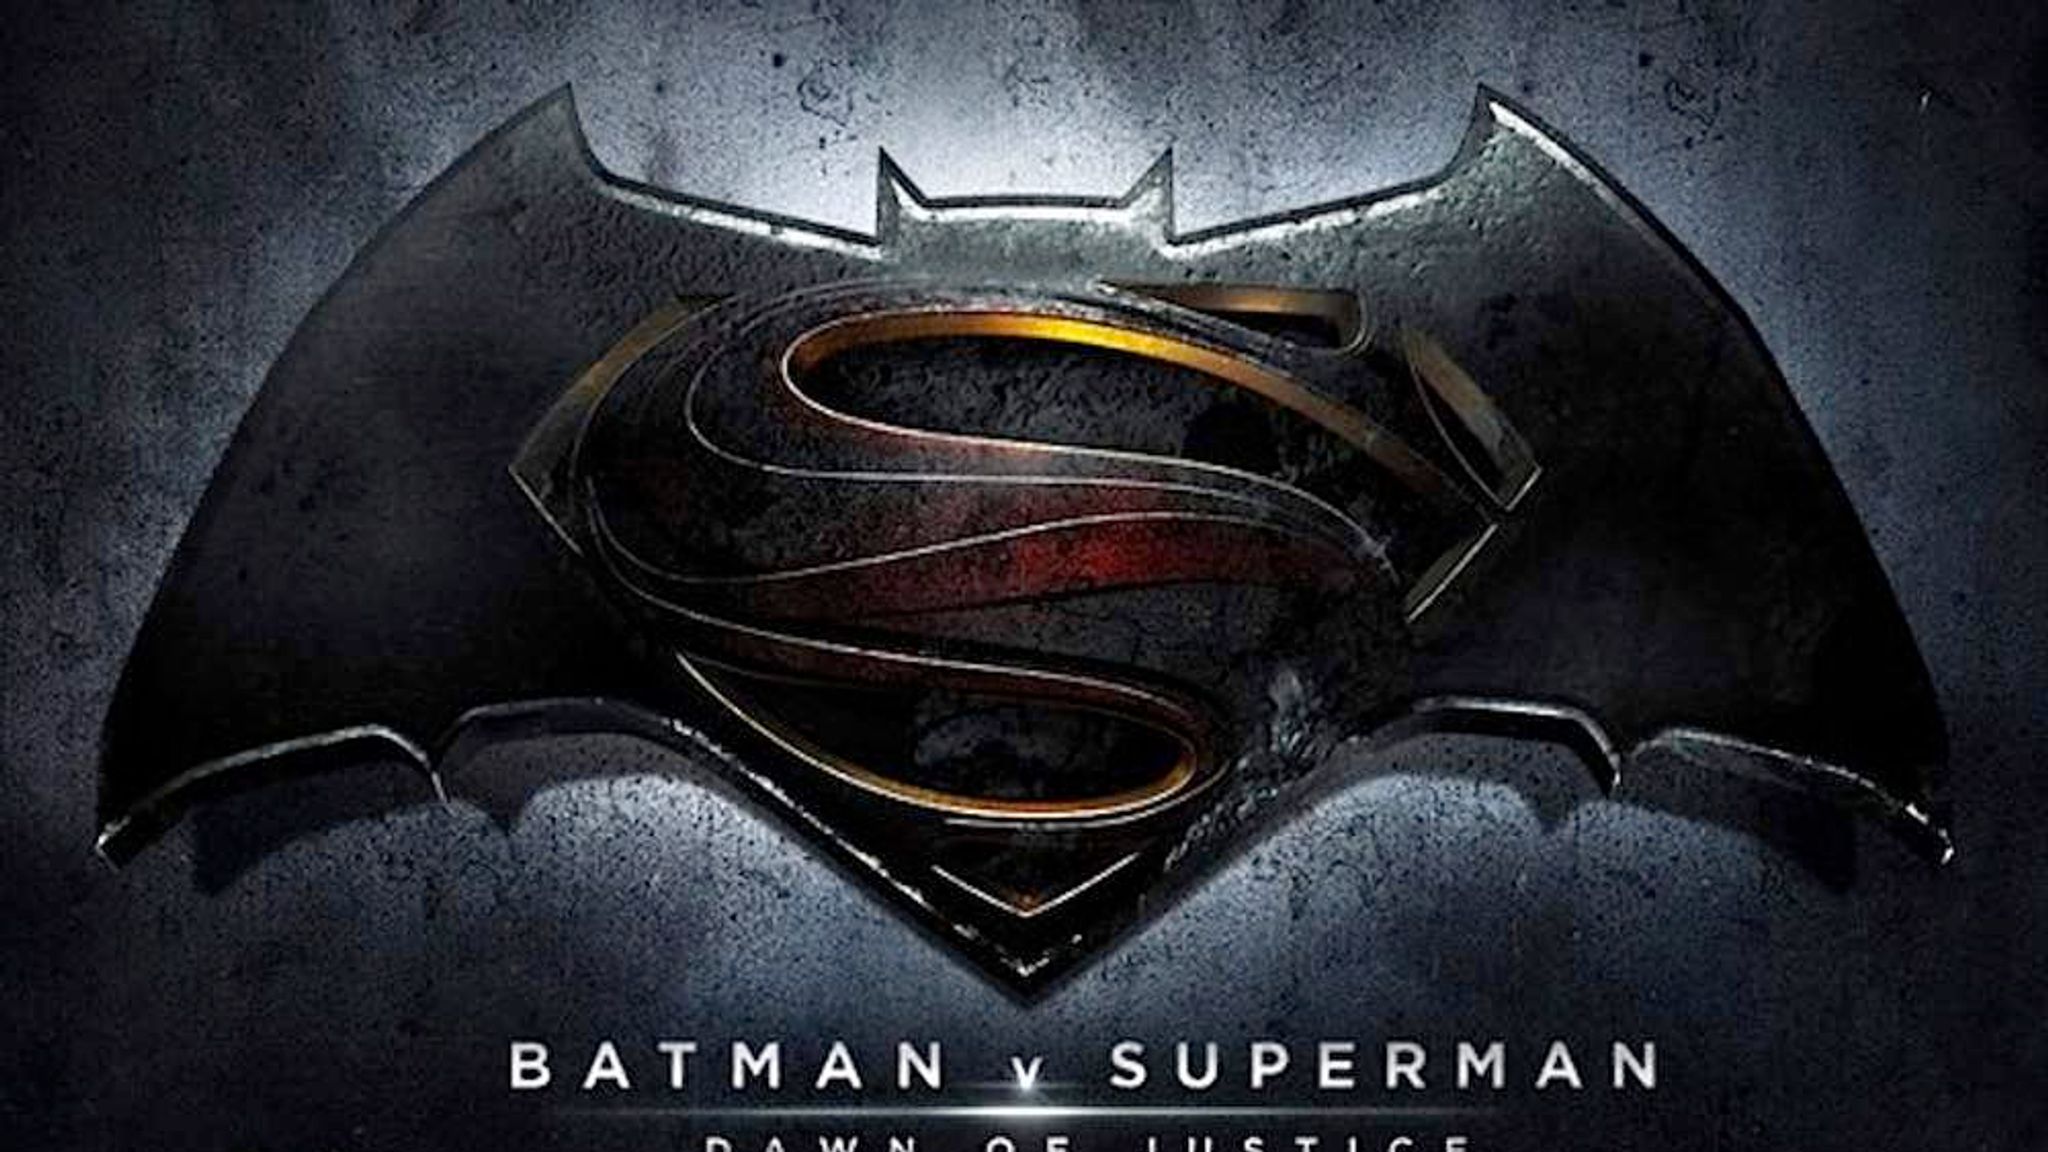 Title For Ben Affleck's Batman Film Revealed | Ents & Arts News | Sky News